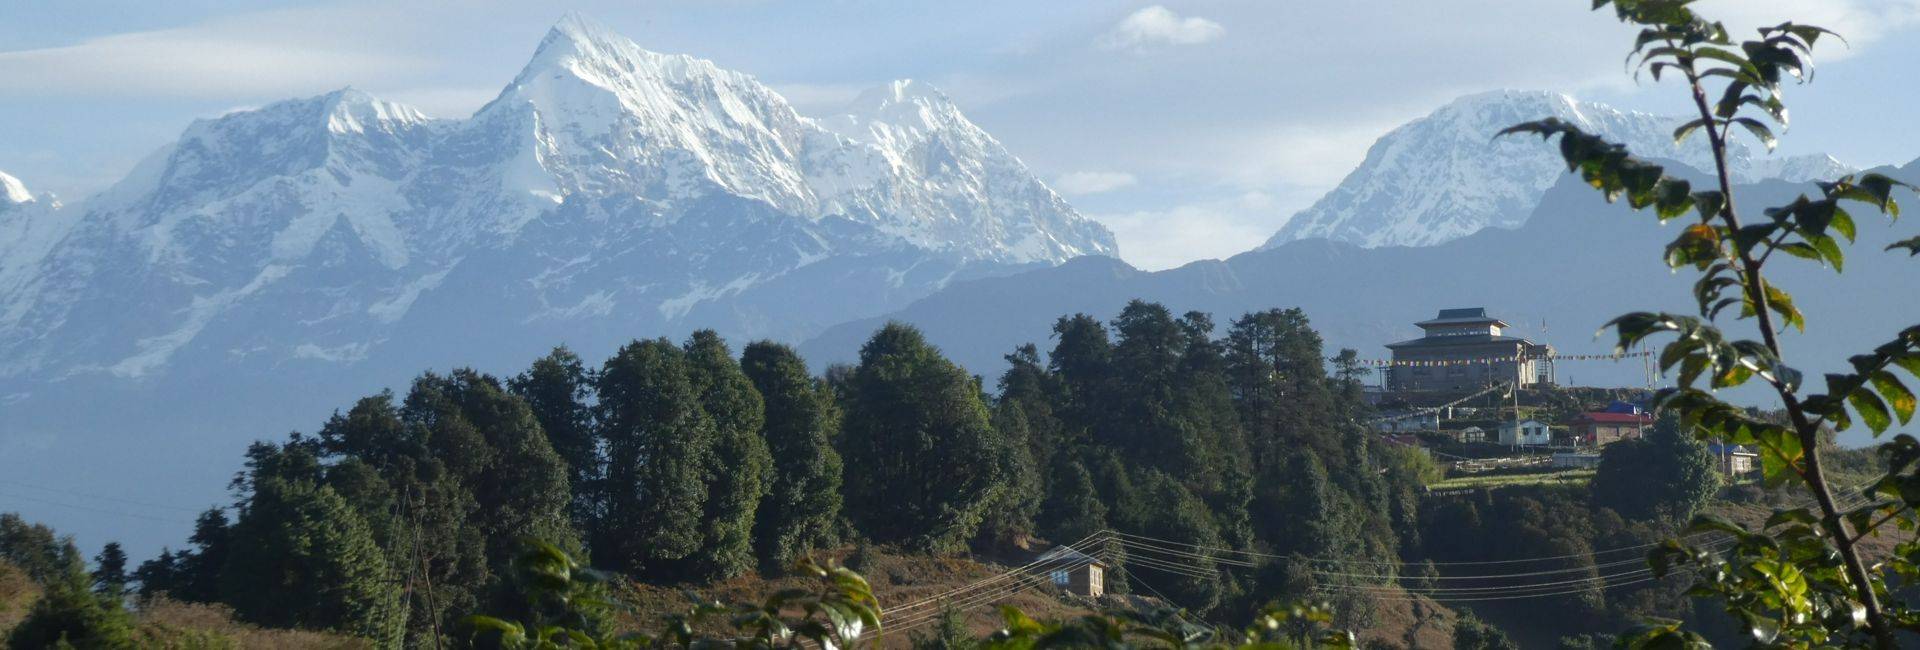 Pikey Peak trek in Nepal